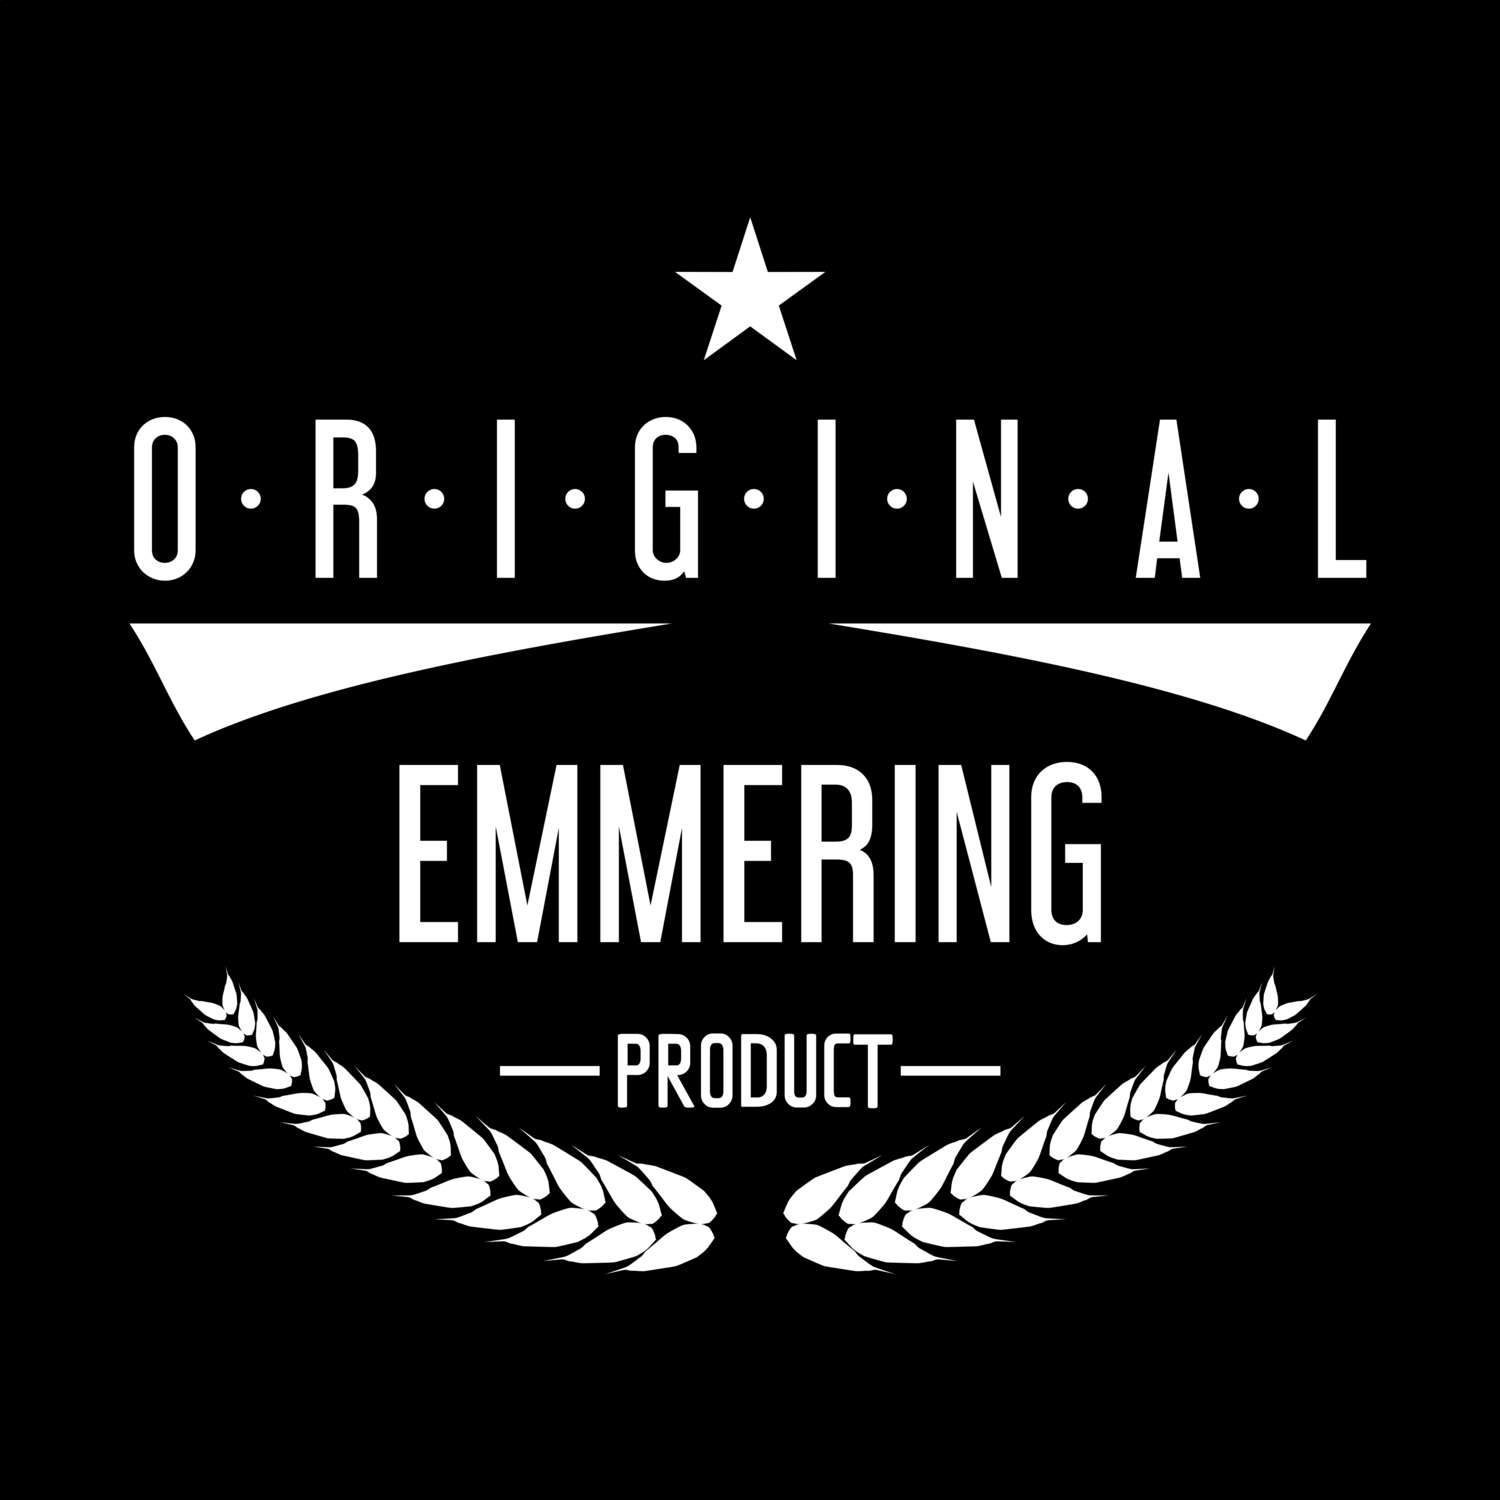 Emmering T-Shirt »Original Product«